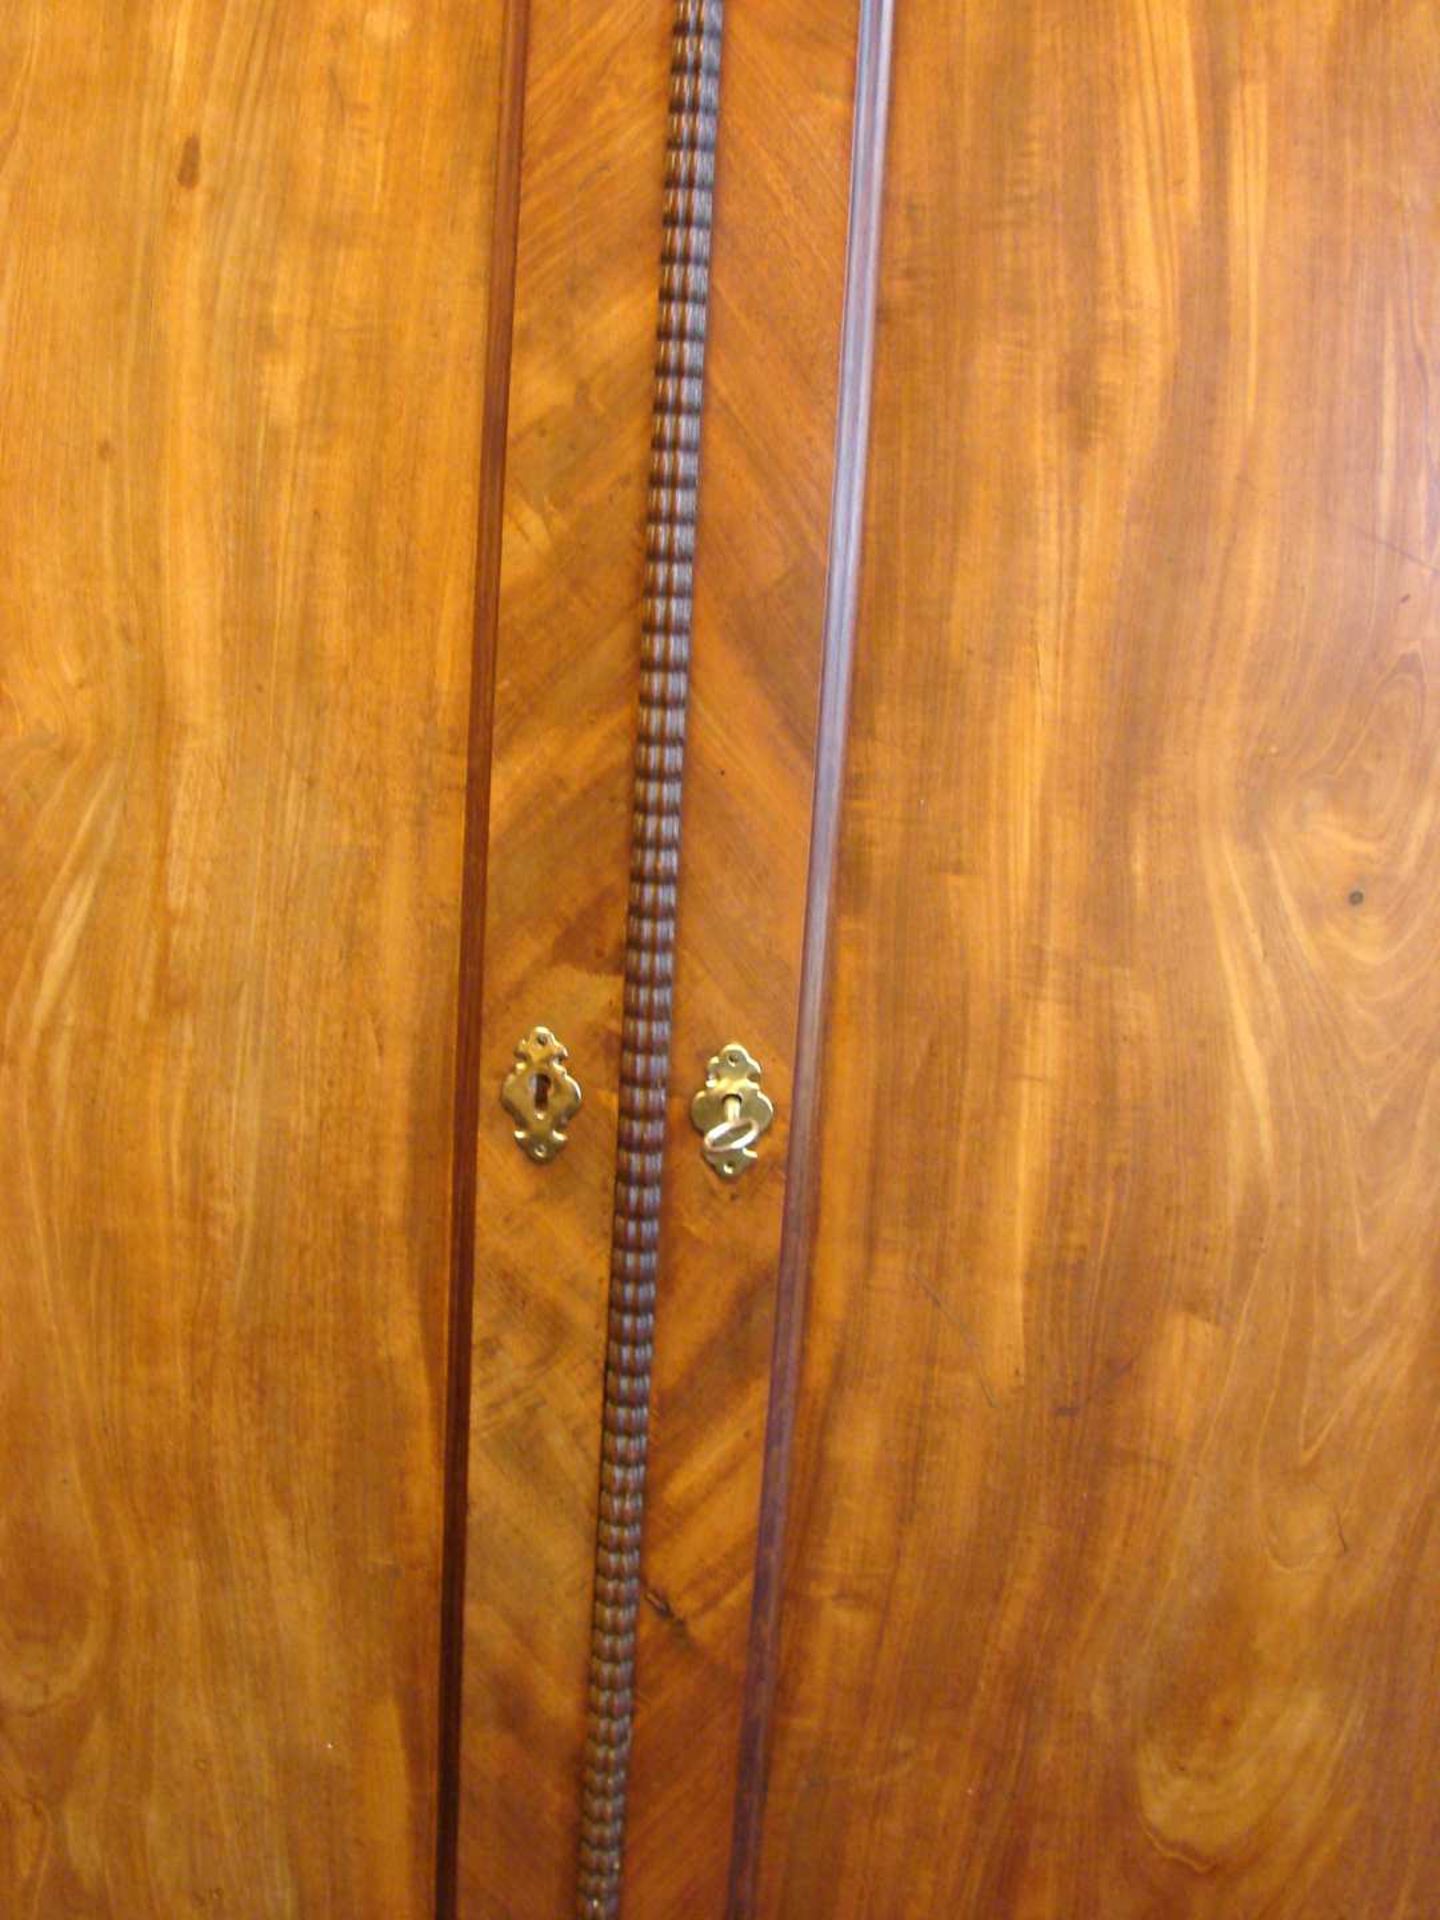 Schrank, Spätbiedermeier, 2. Hälfte 19. Jhd.Mahagoni, Türen mit Brezelfüllung, kle - Bild 2 aus 2